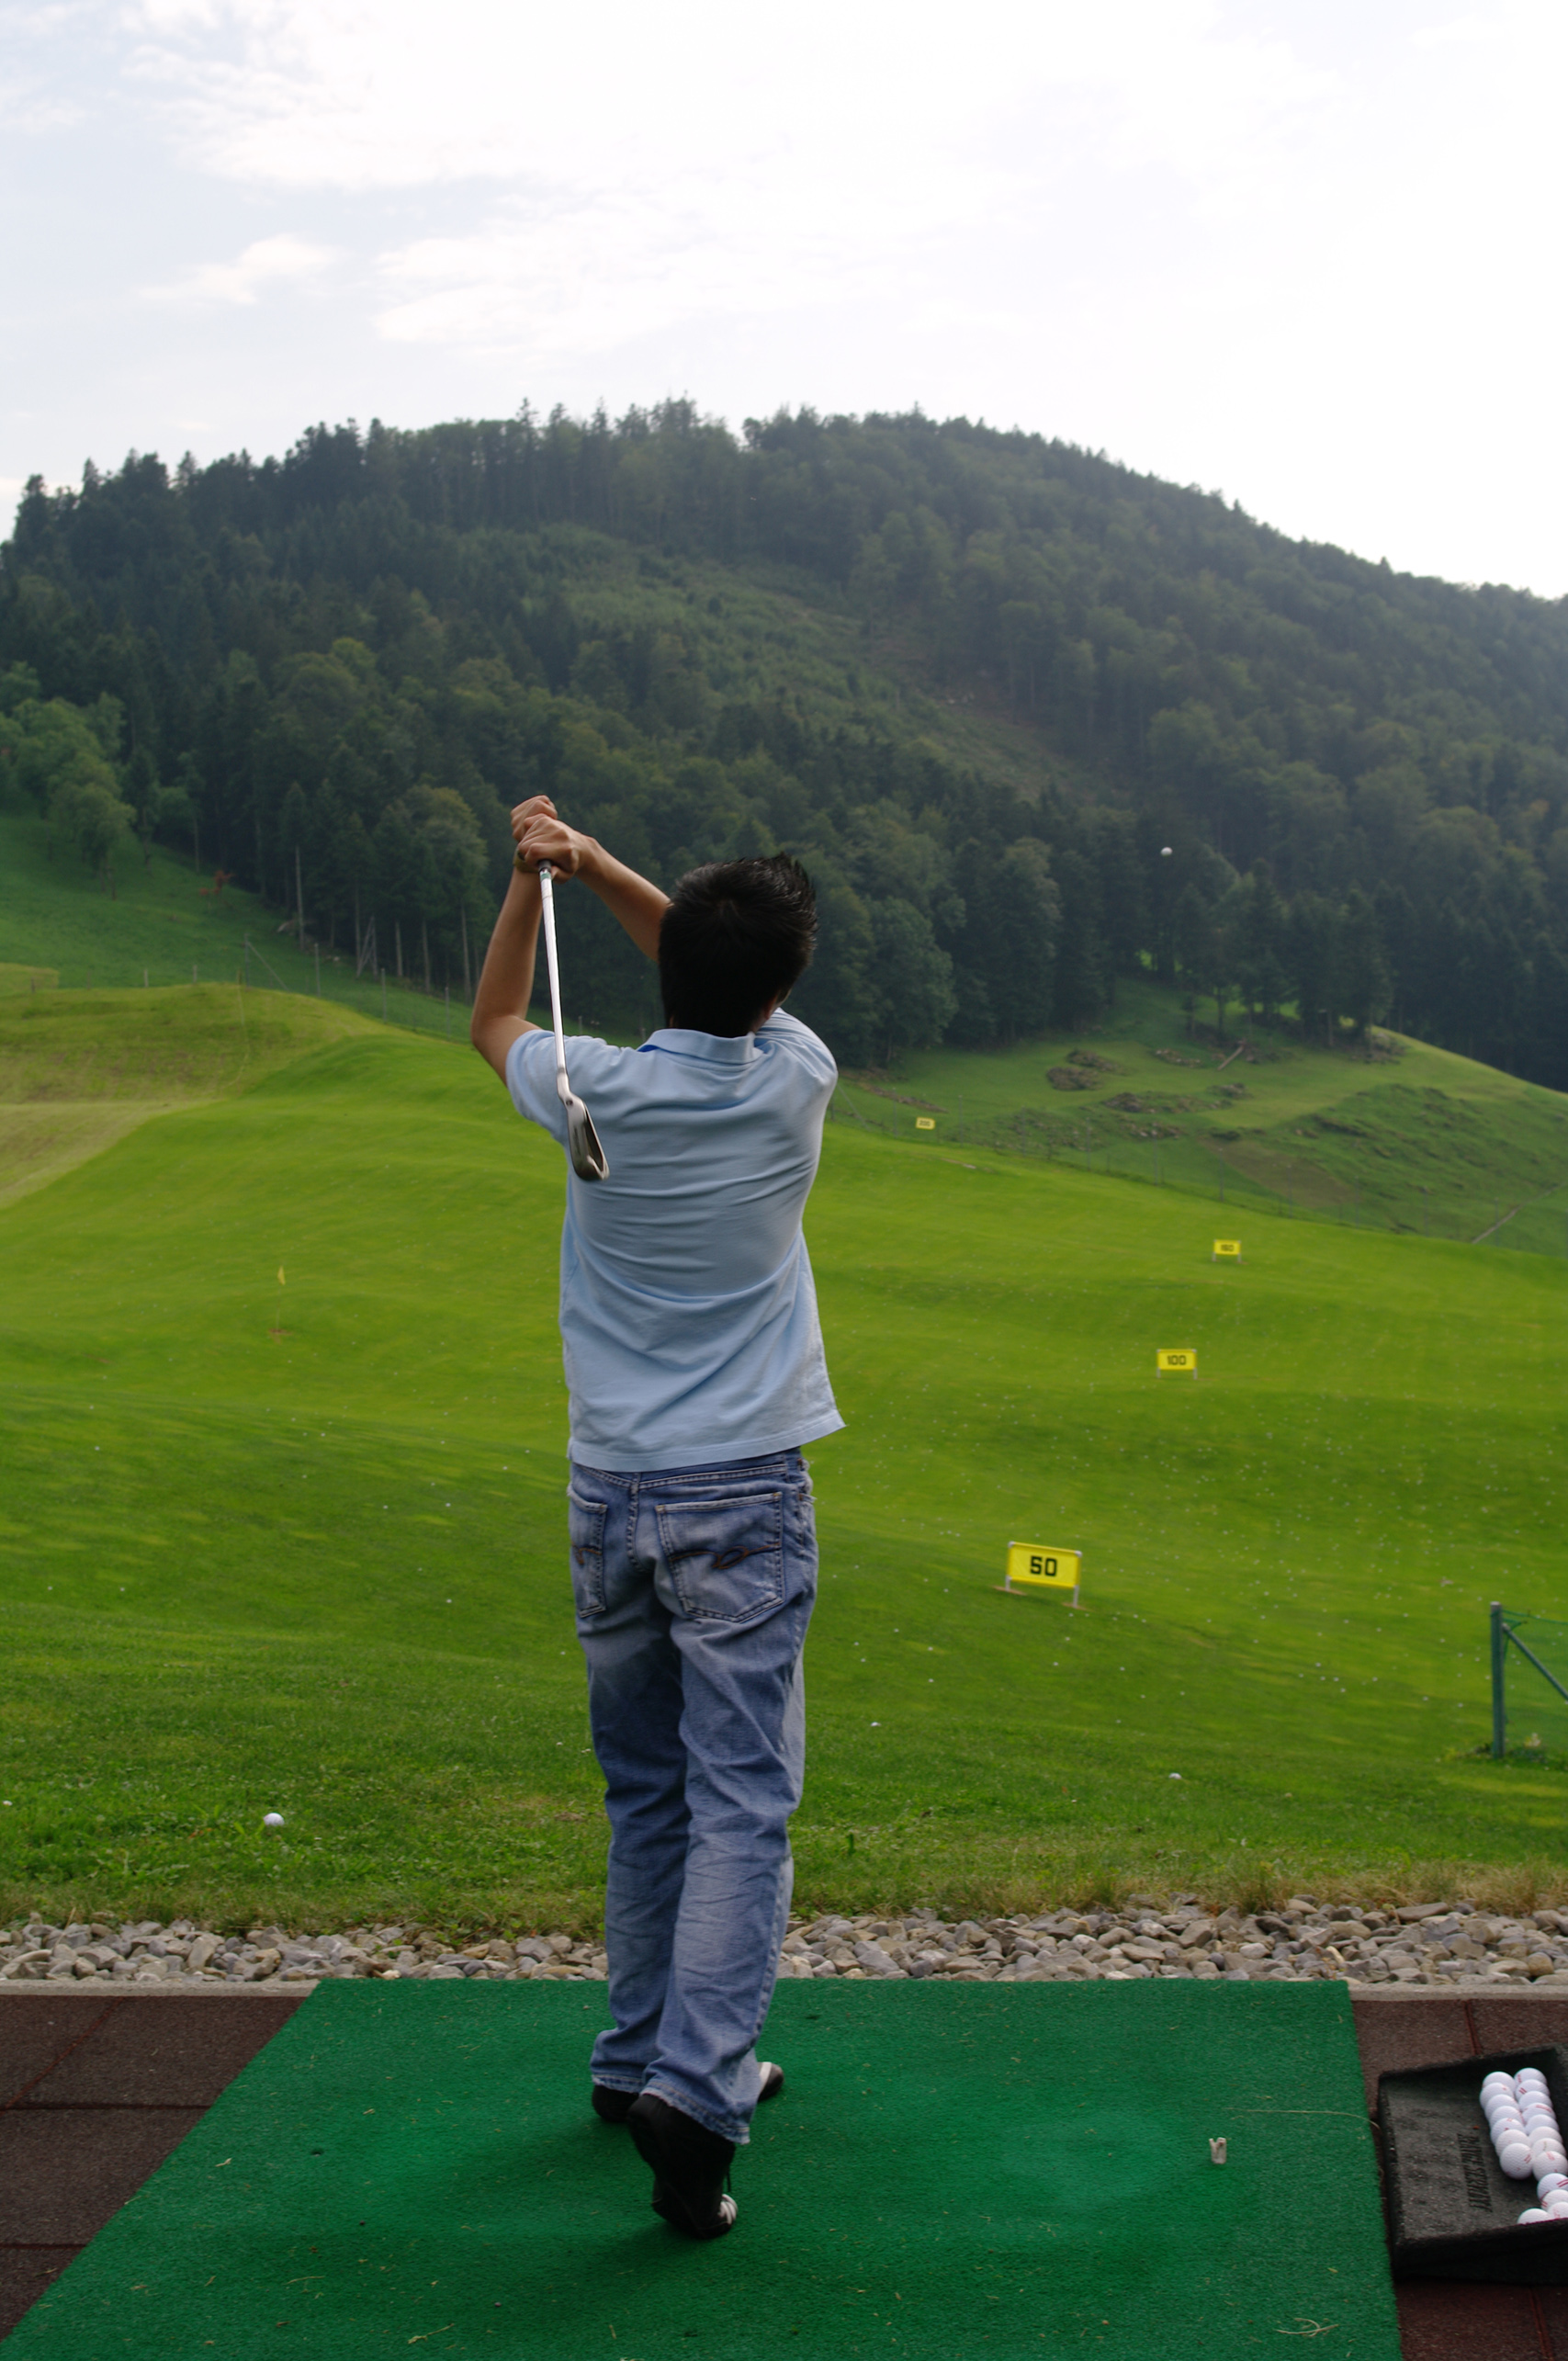 Practicing golf, Activity, Ball, Gold, Golfer, HQ Photo